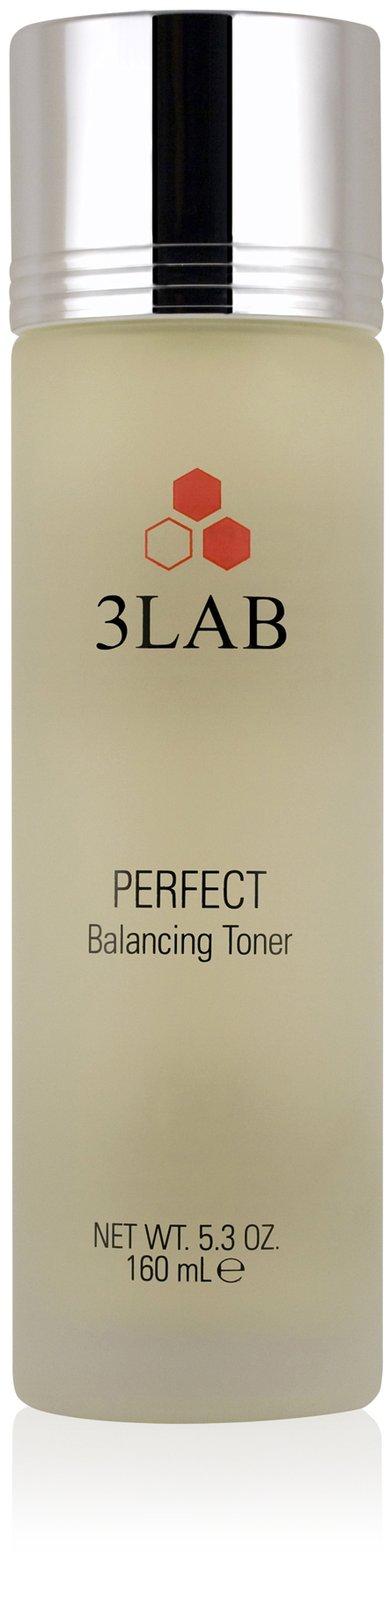 3lab Perfect Balancing Toner